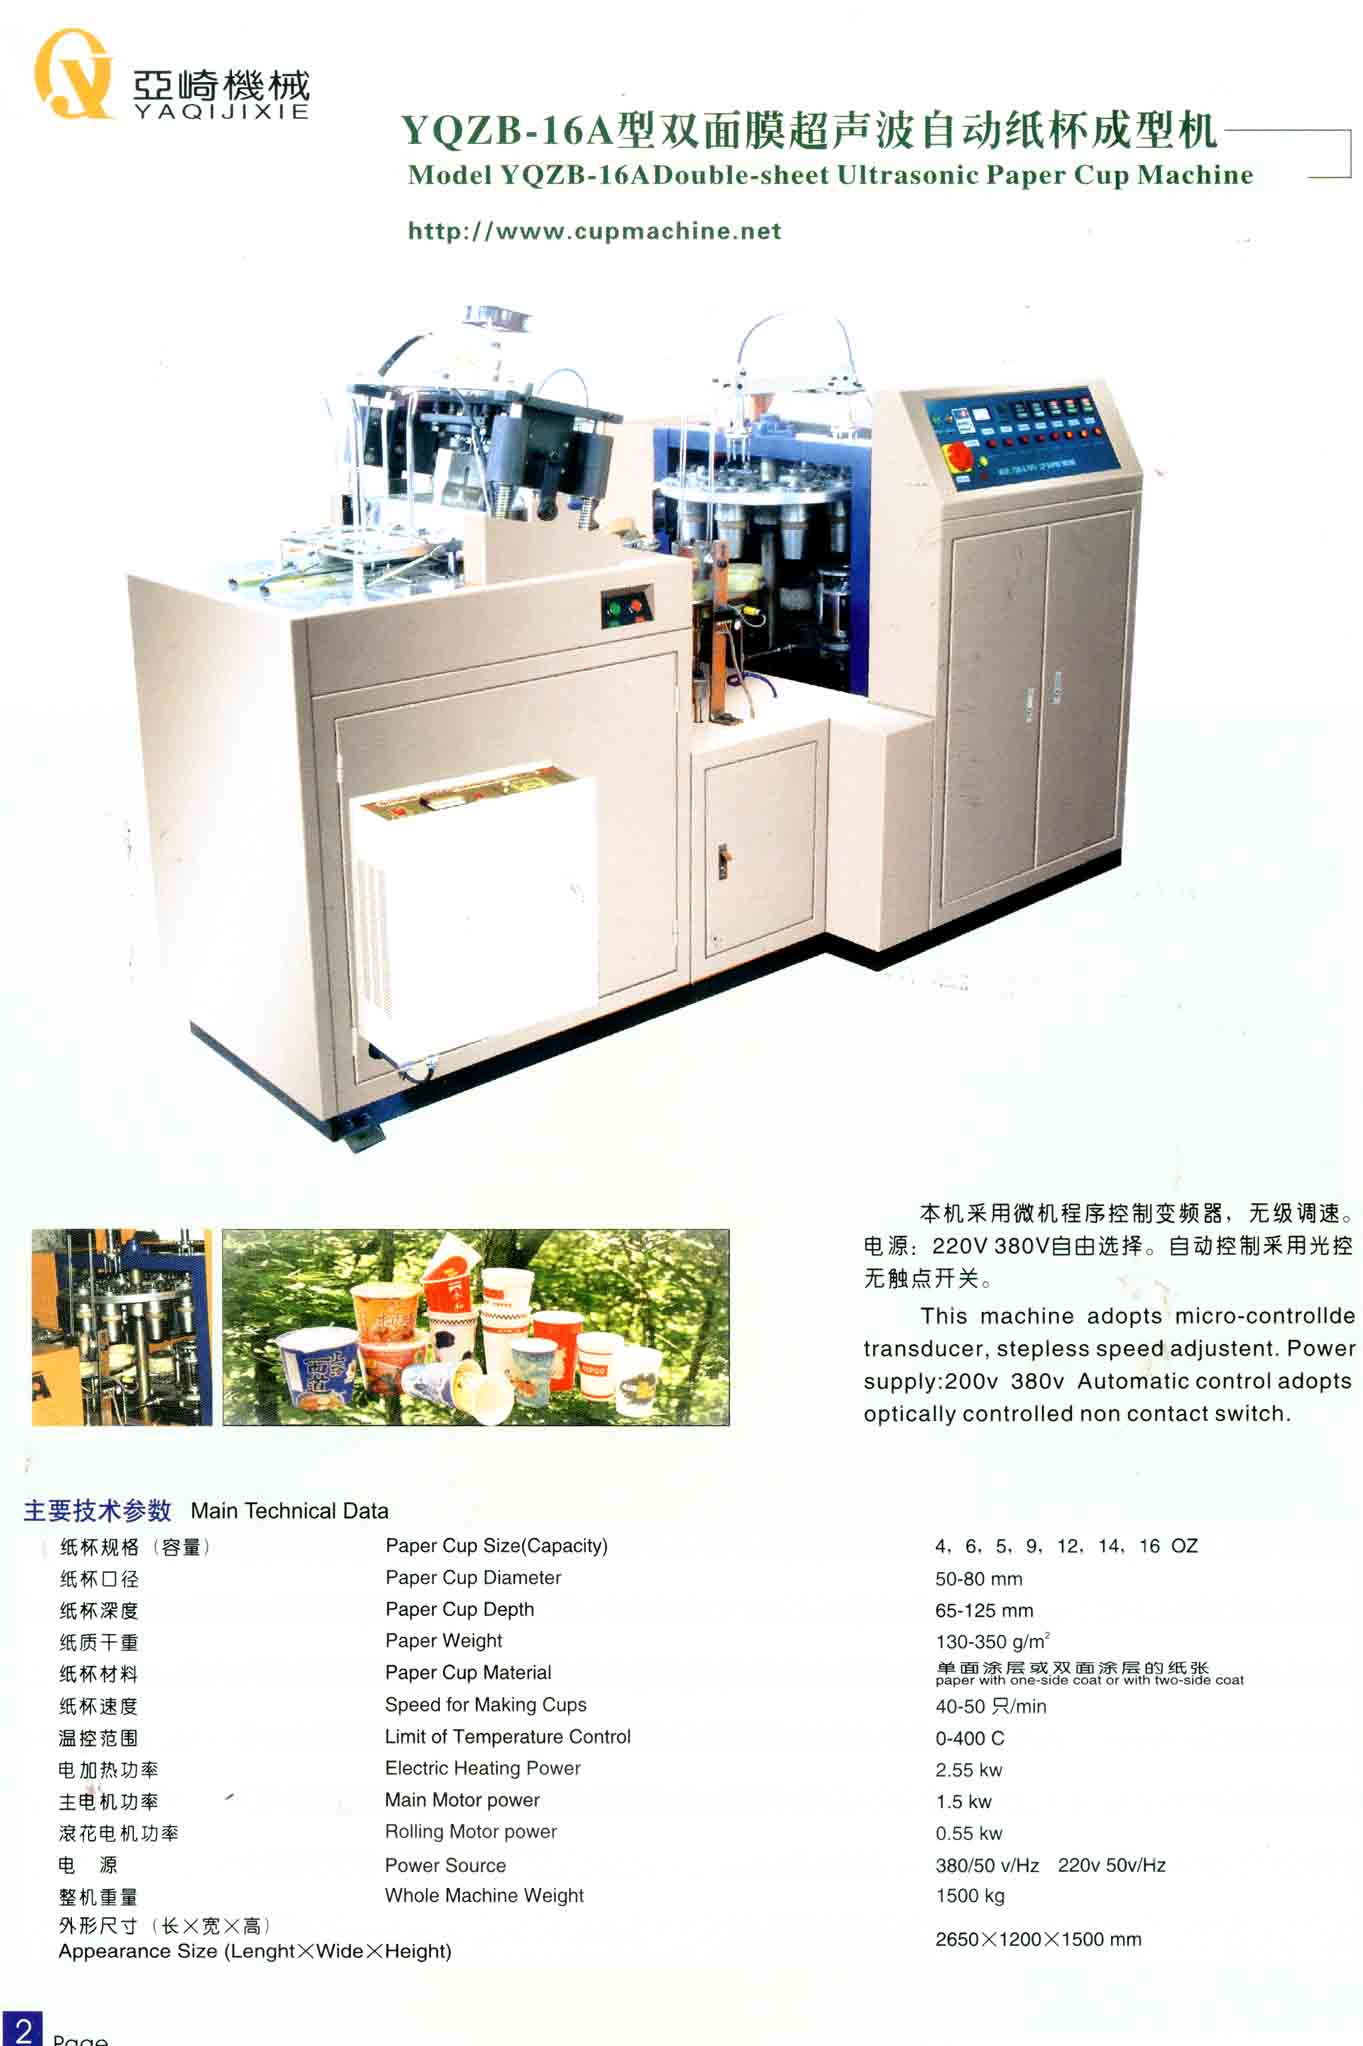 YQZB-16A double-sheet ultrasonic paper cup making machine